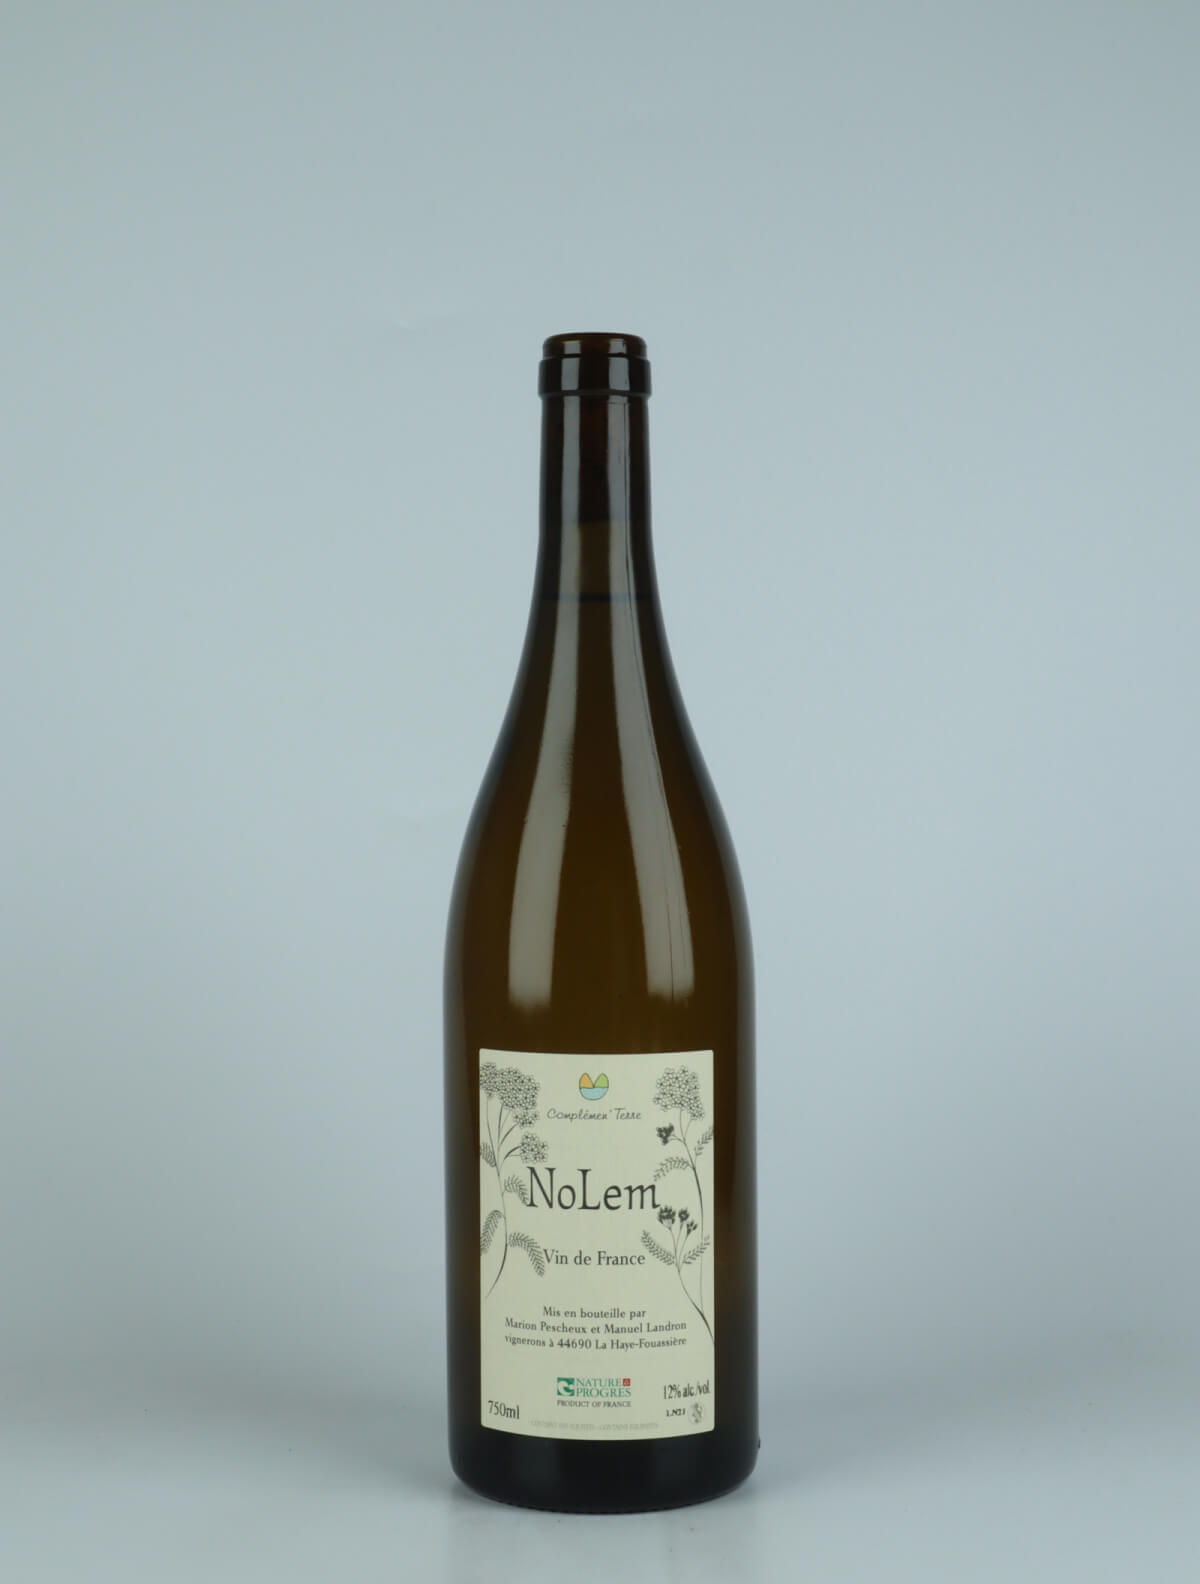 A bottle 2021 Nolem White wine from Complémen'terre, Loire in France